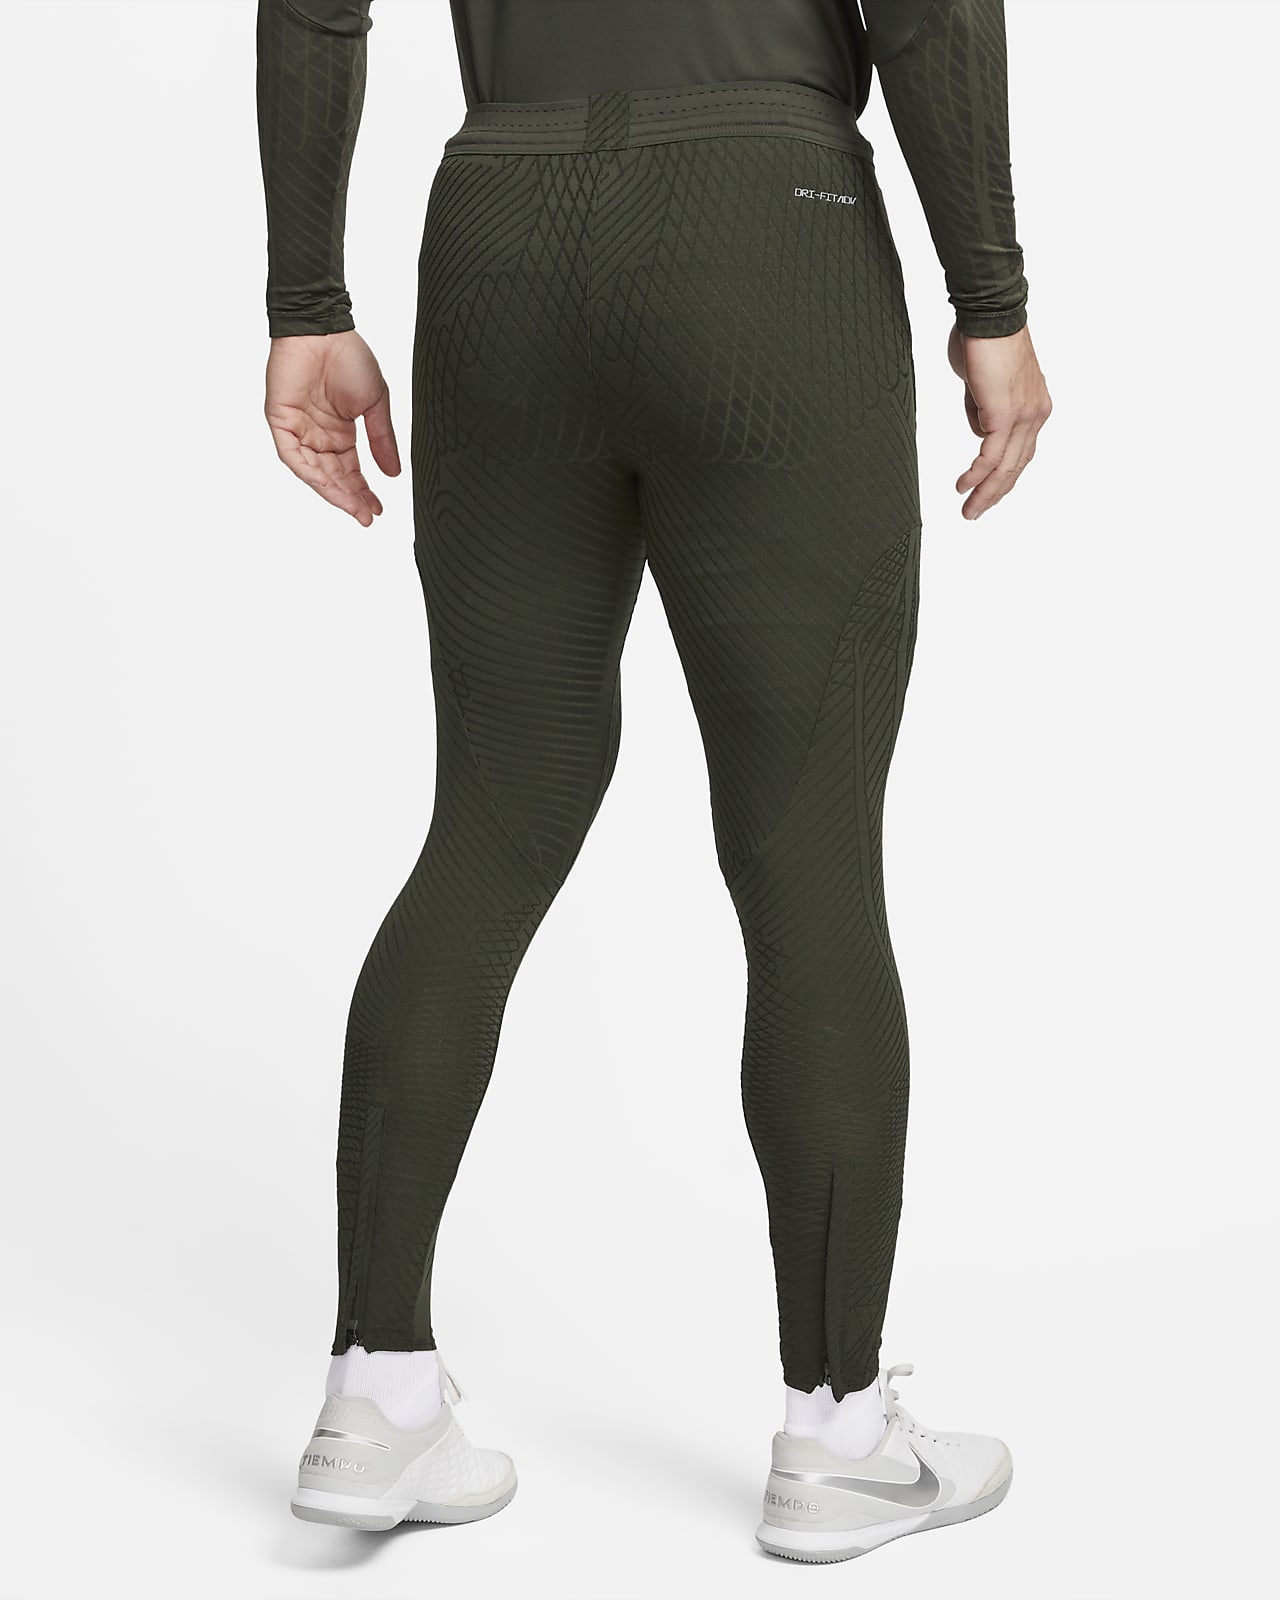 Sports pants Nike FC Essential